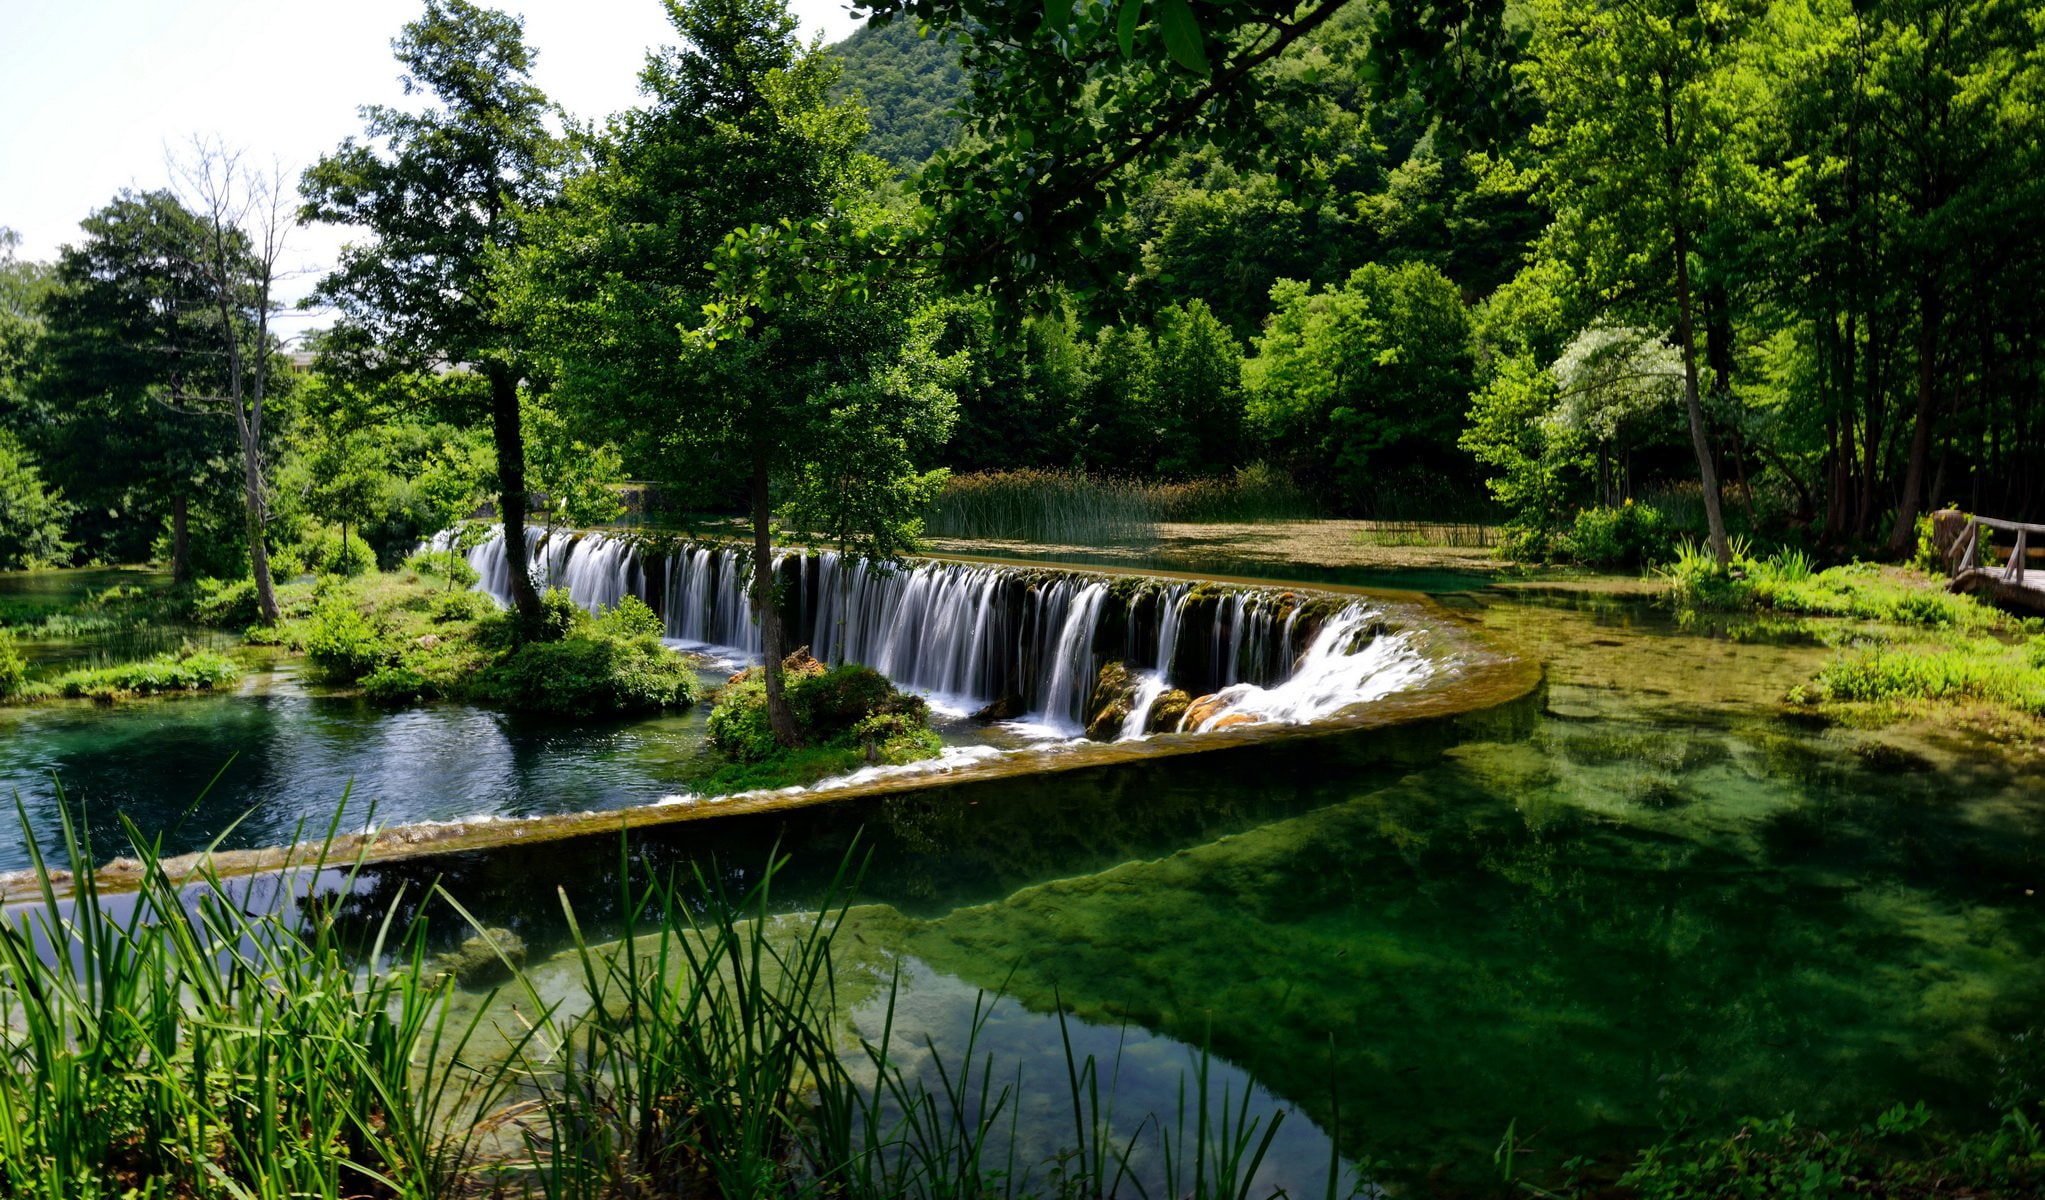 bosnia, herzegovina, nature, pliva, river, scenery, trees, waterfall